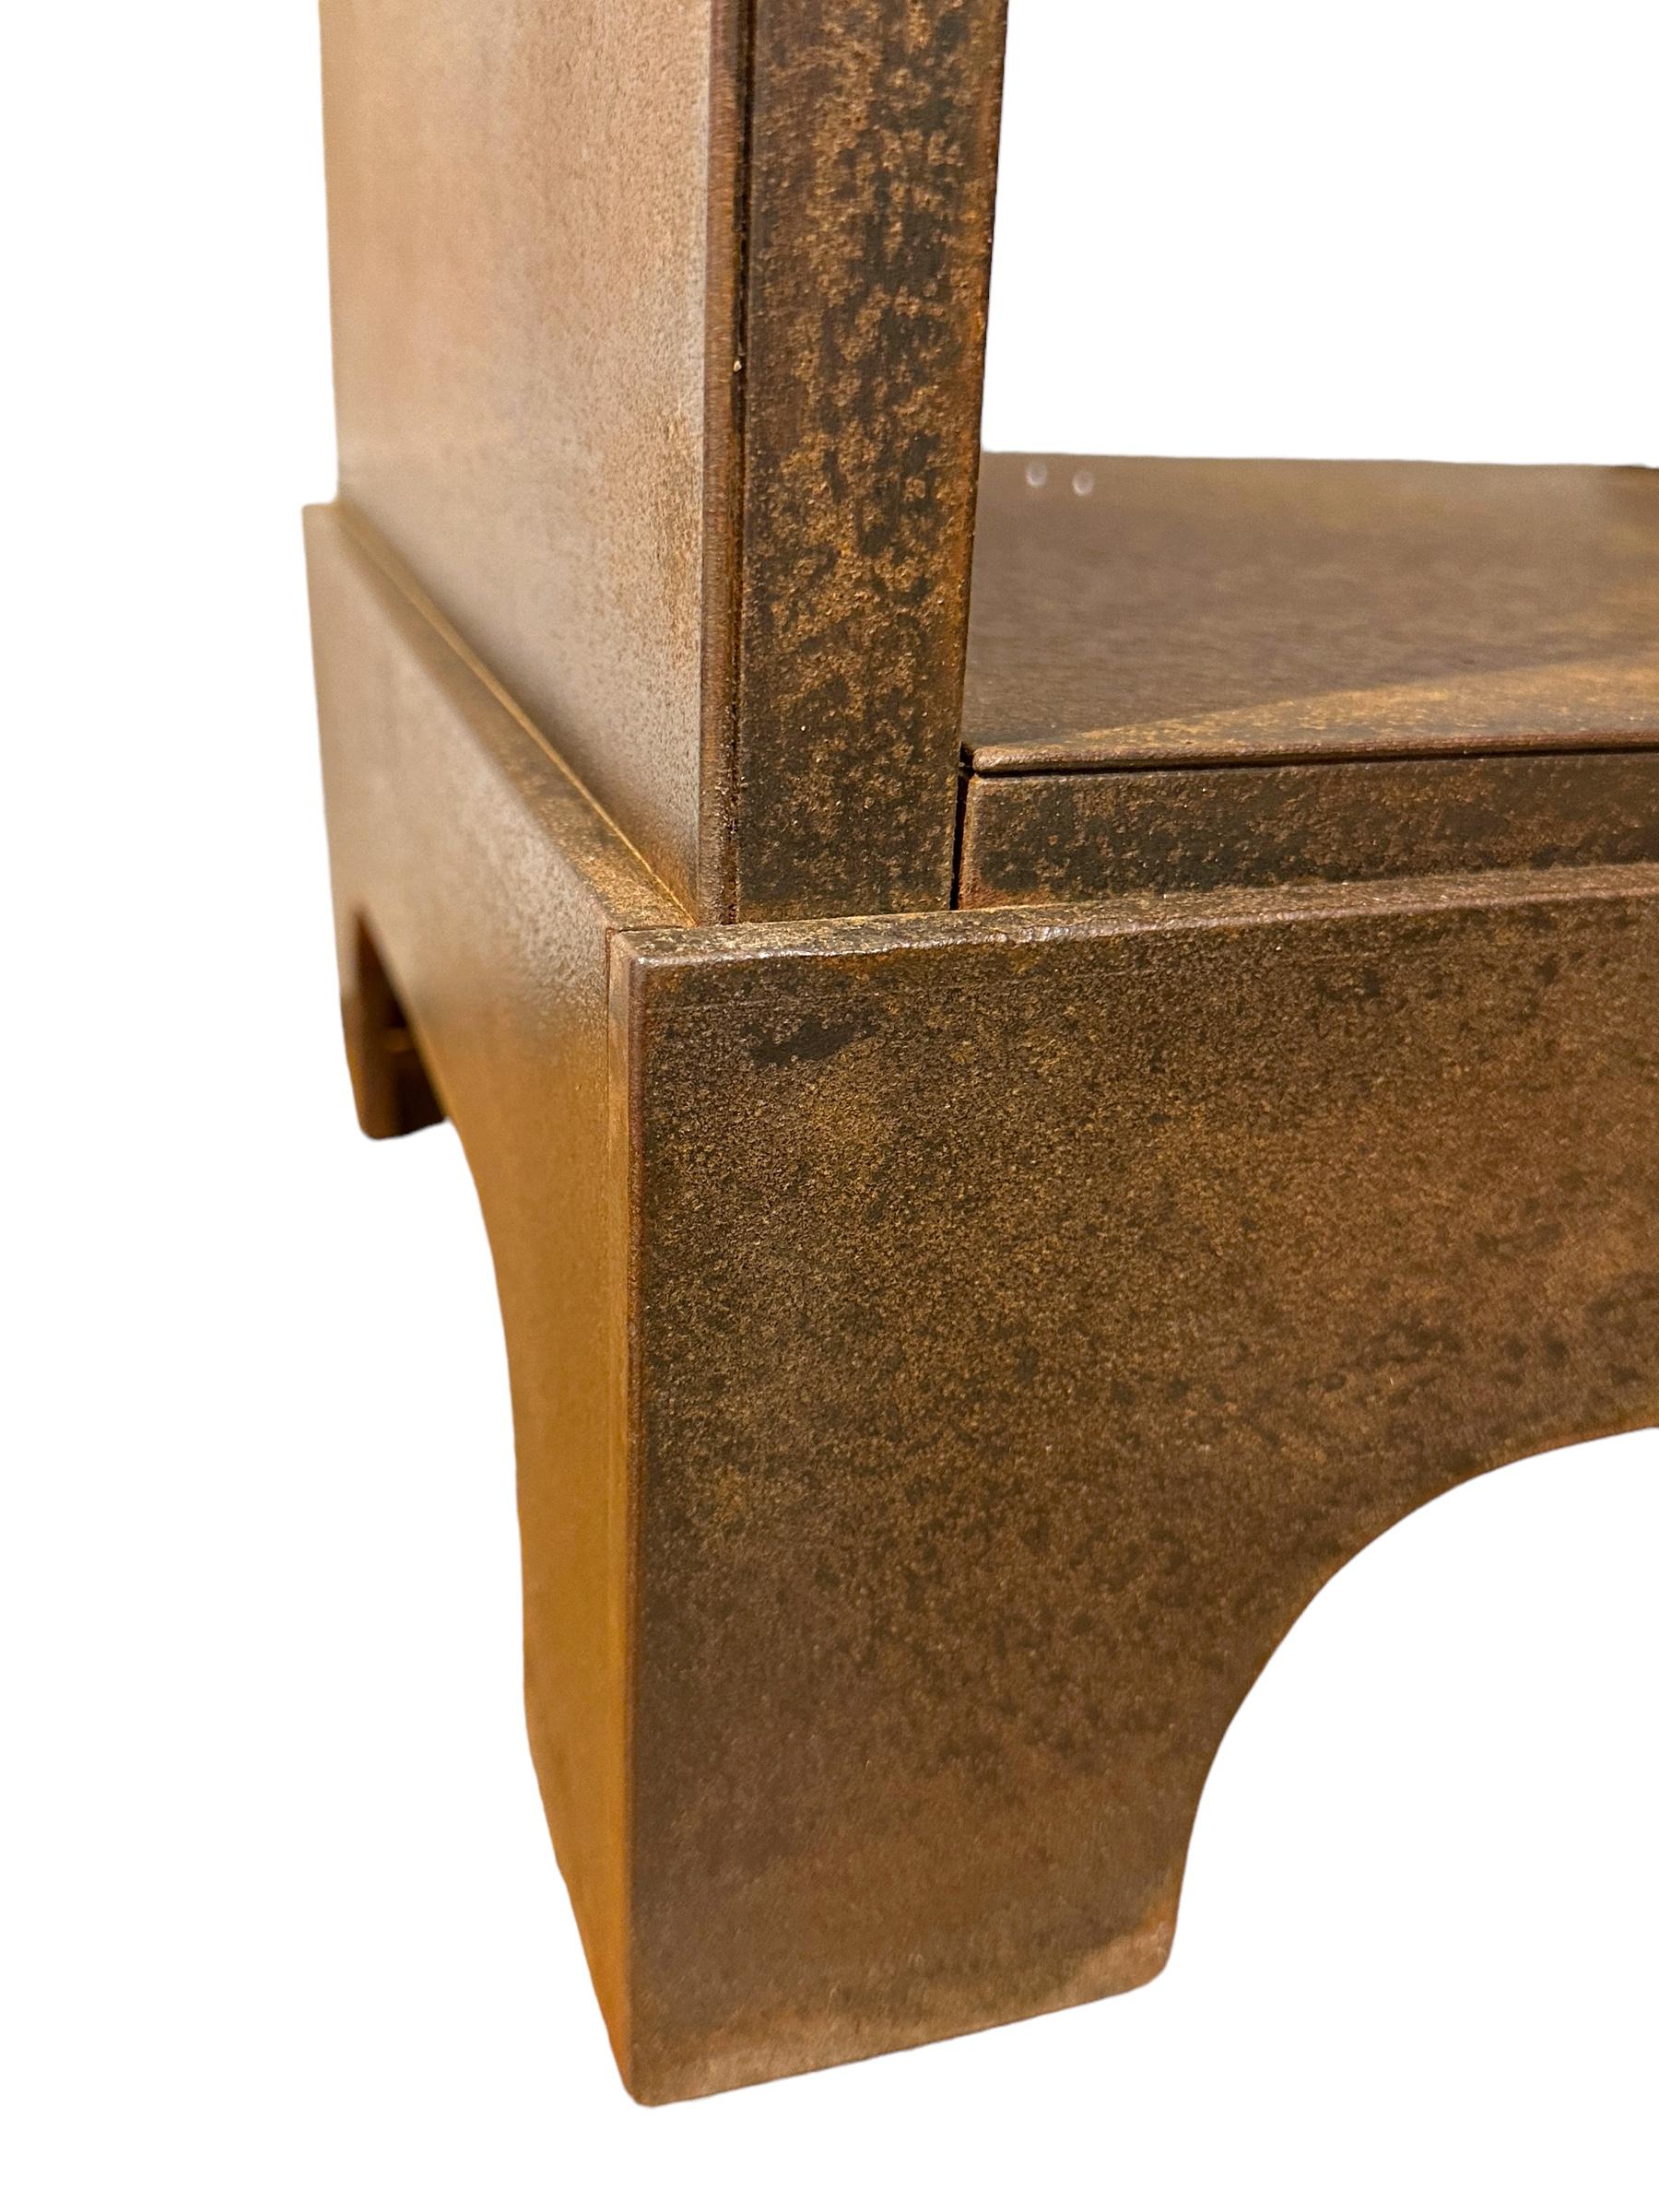 Shaker Jim Rose - Repurposed Steel Bookcase in Natural Rusted Patina, Art Furniture For Sale